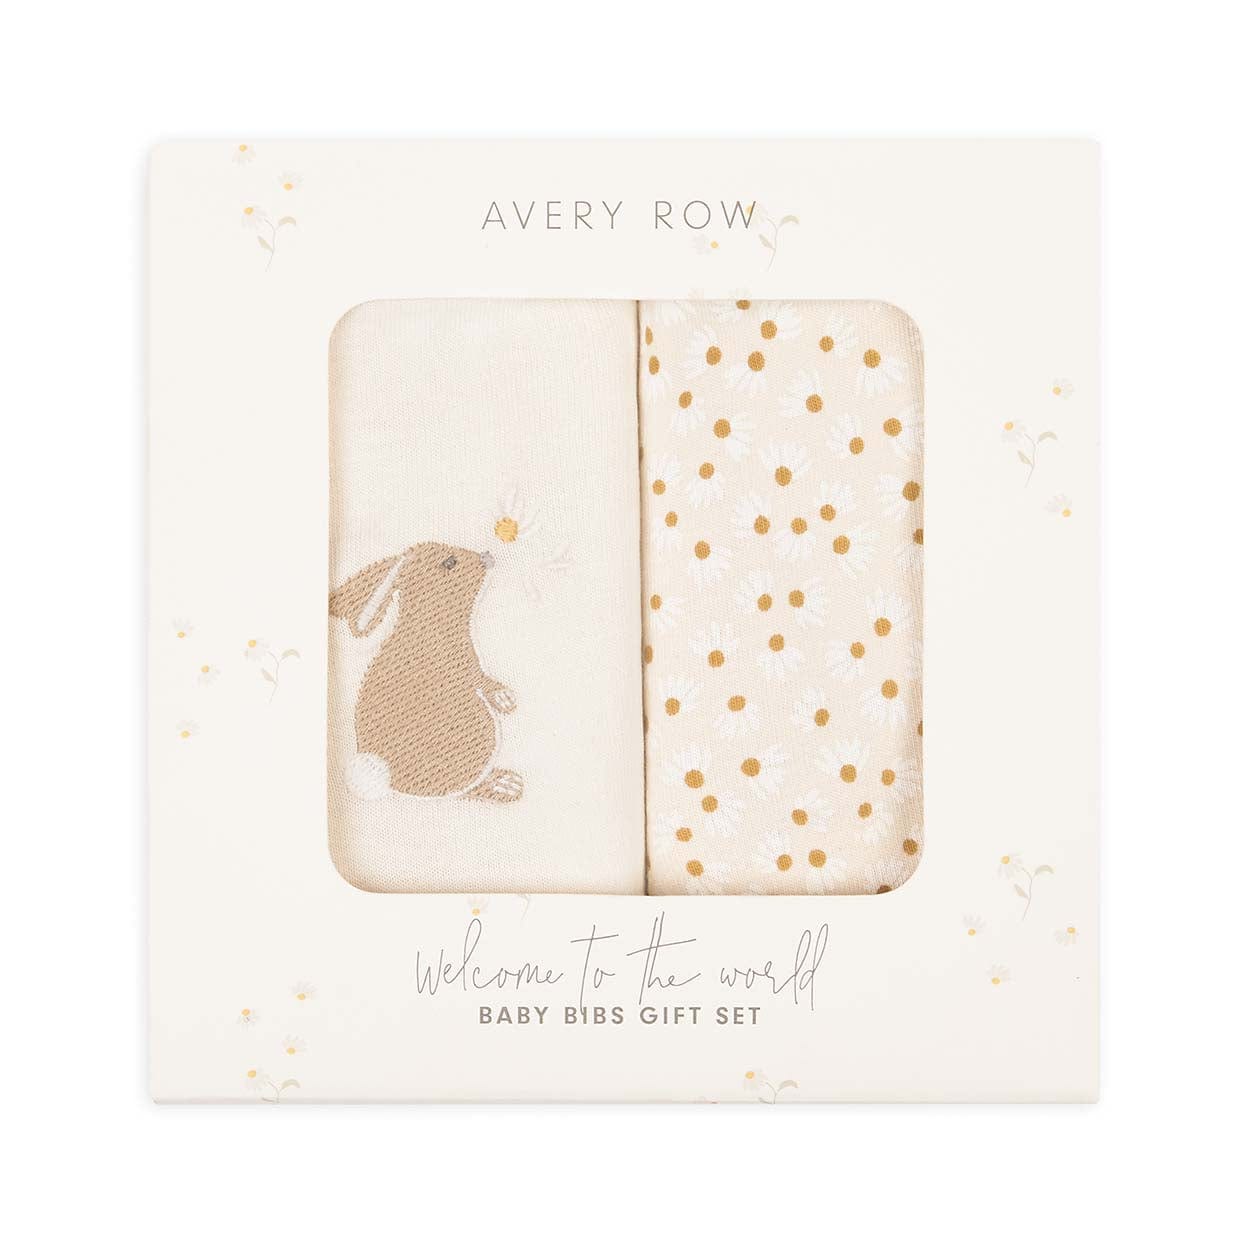 Avery Row Gifting Baby Bibs Gift Set - Bunny / Daisy Meadow